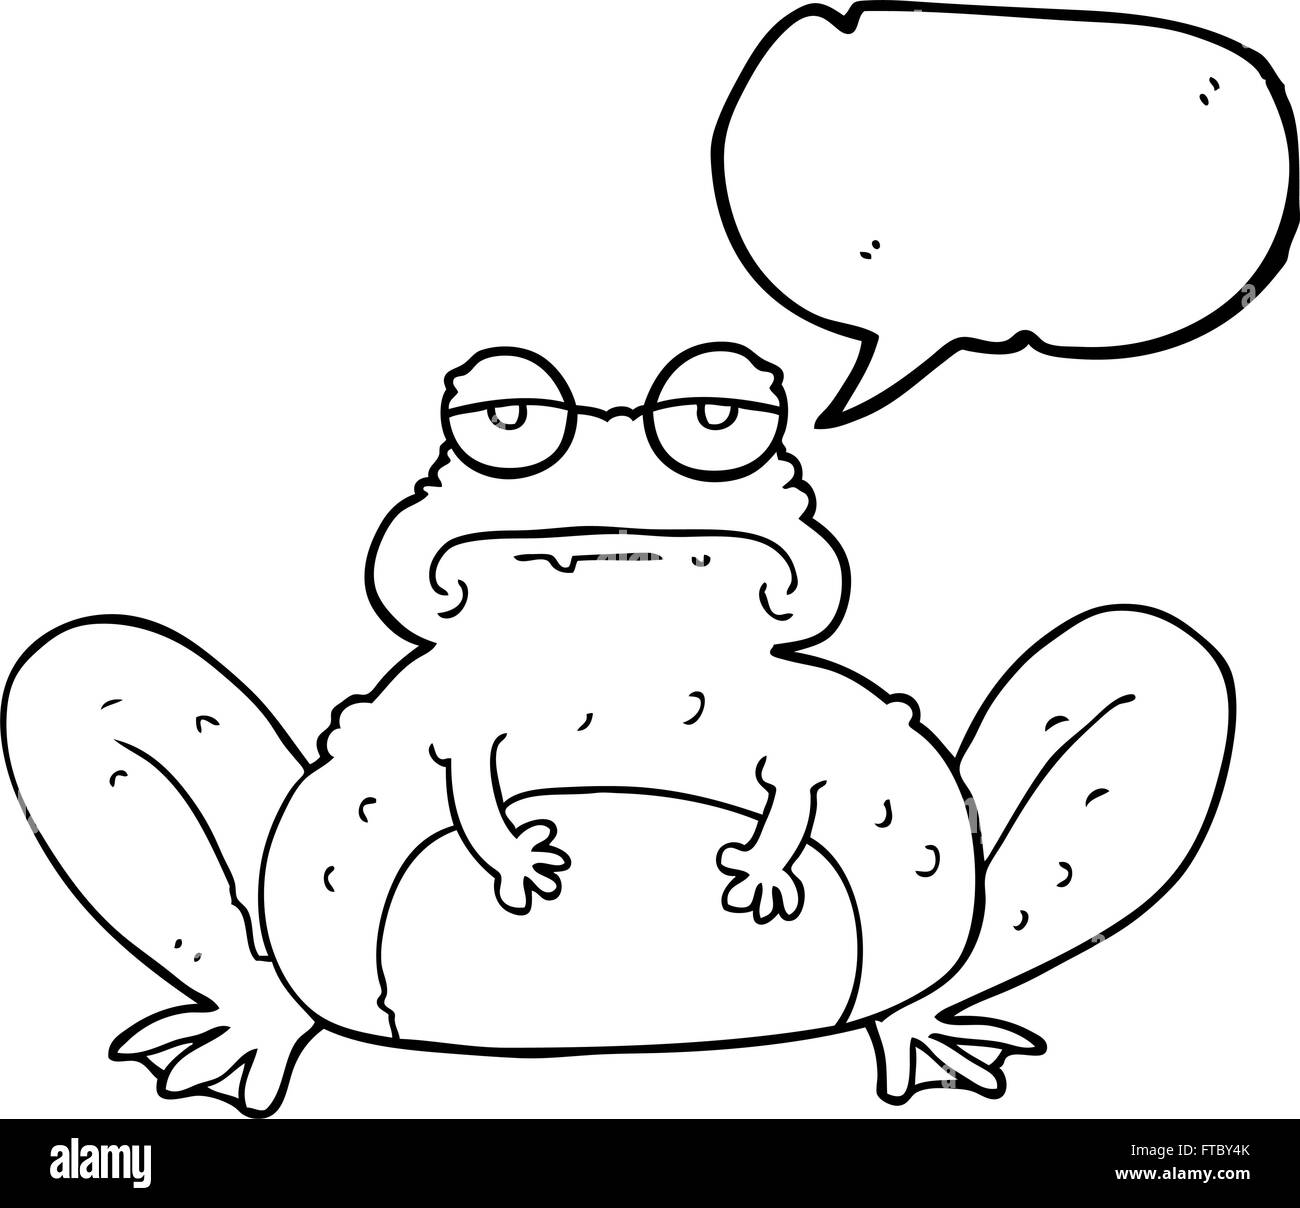 freehand drawn speech bubble cartoon frog Stock Vector